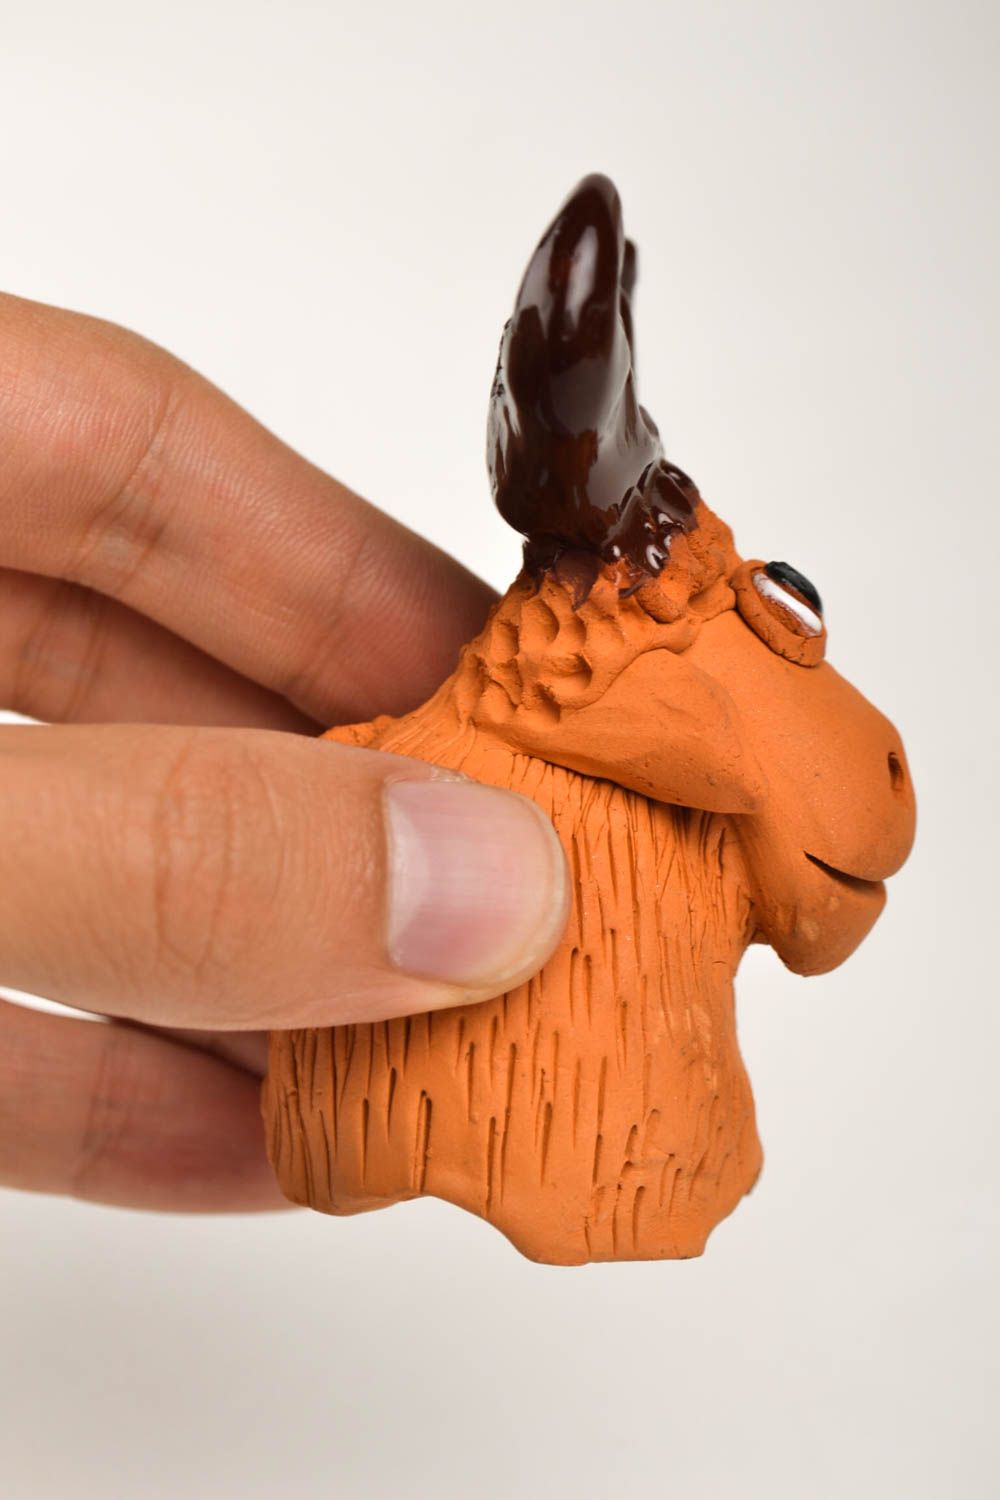 Cervo in ceramica fatto a mano figurina in terracotta souvenir originale foto 2